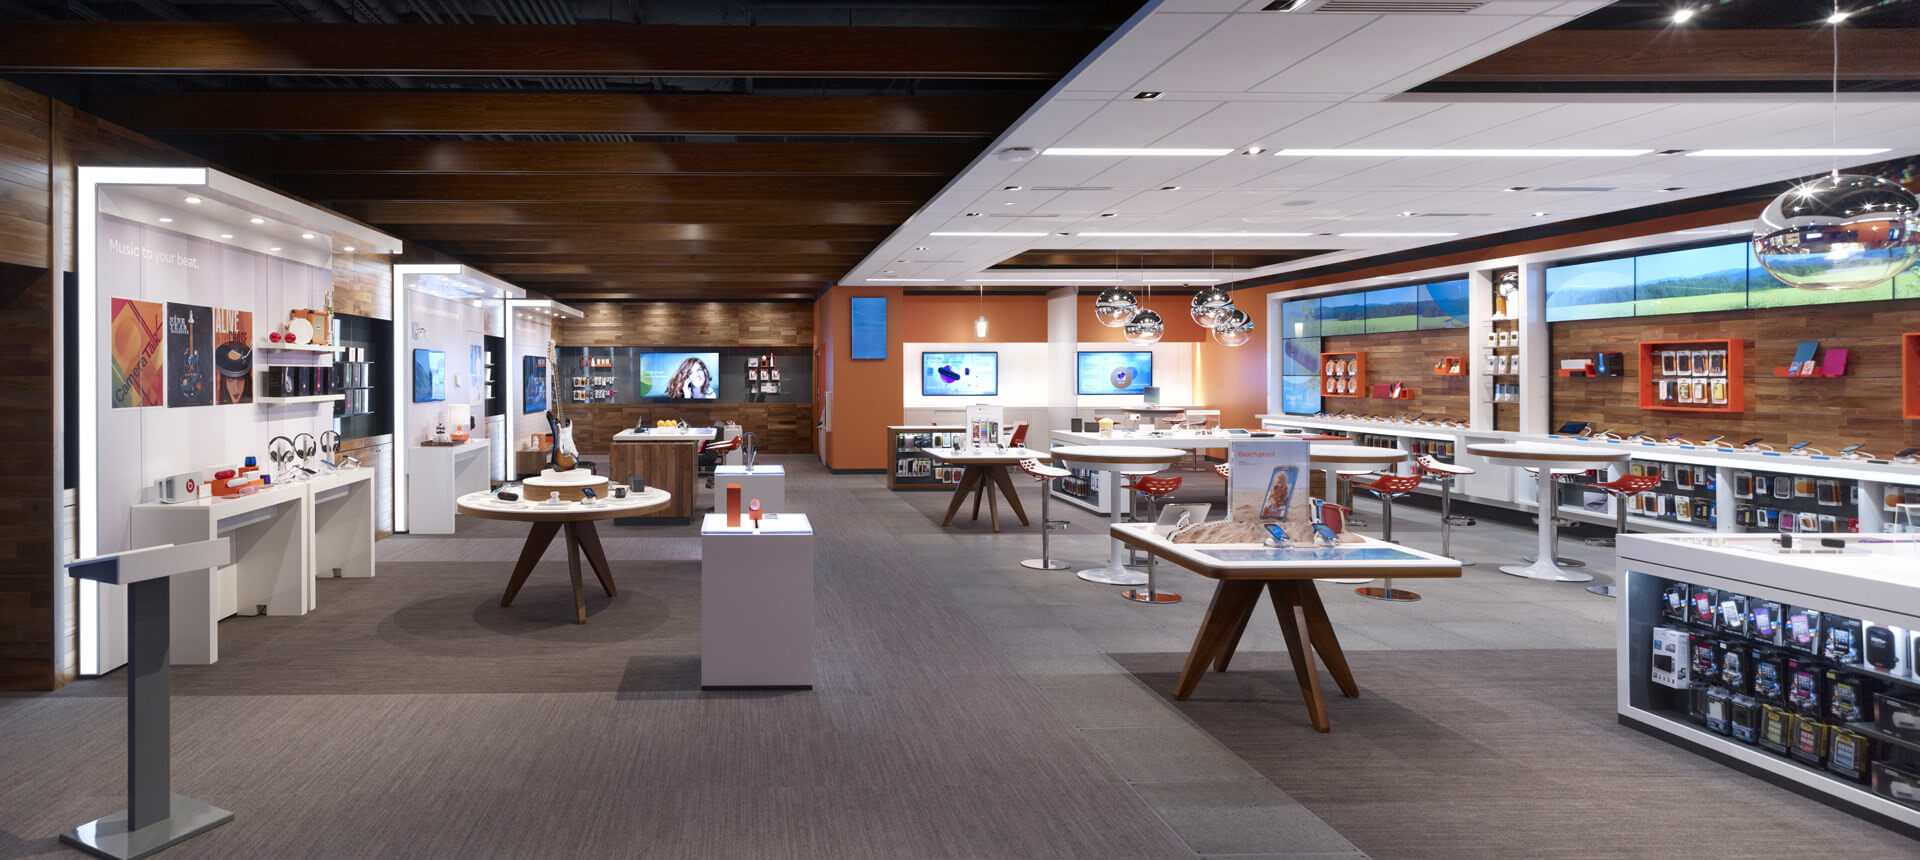 AT&T Store of The Future - CallisonRTKL